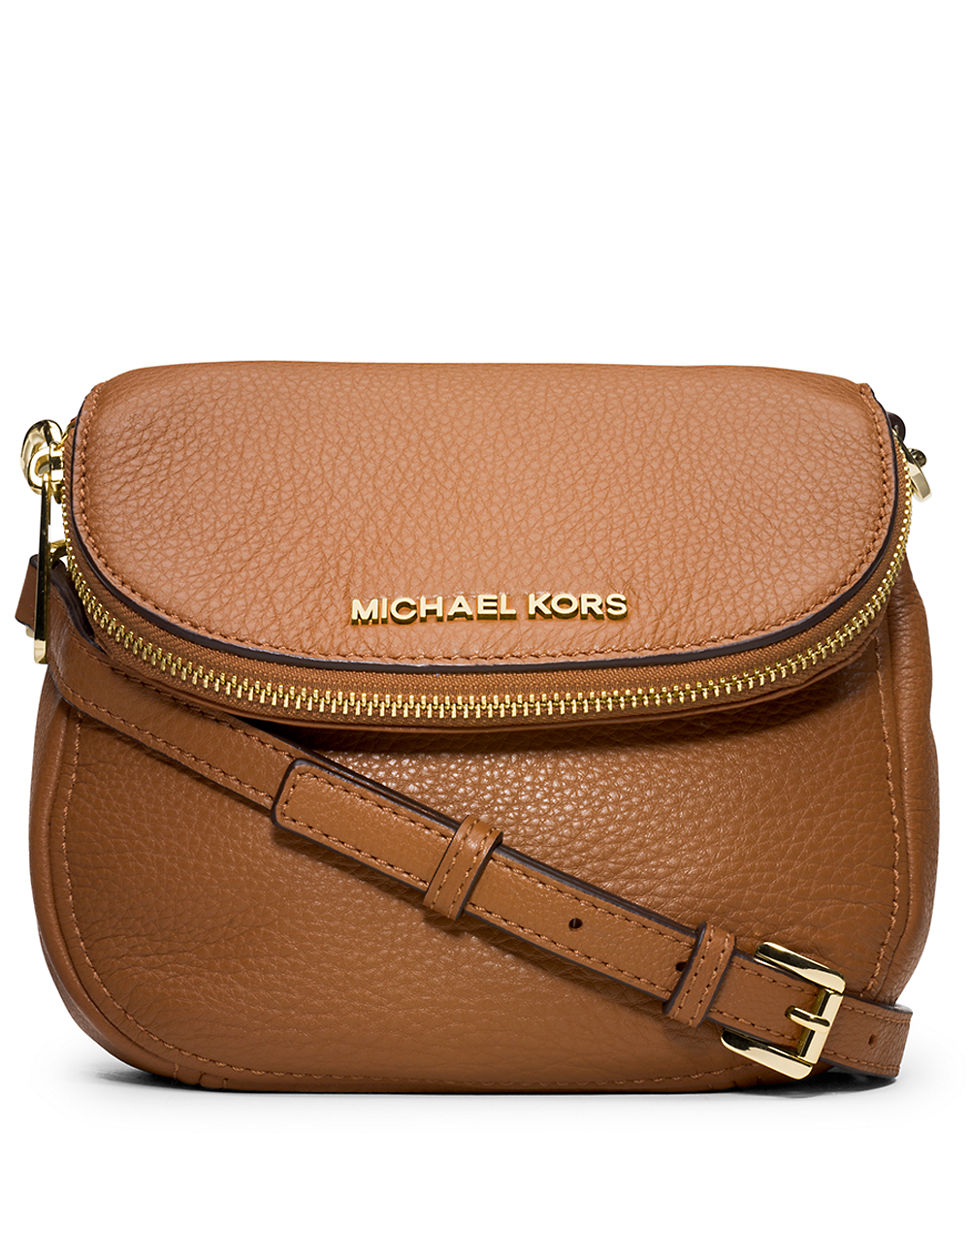 Michael Michael Kors Bedford Leather Flap Crossbody Bag in Brown | Lyst